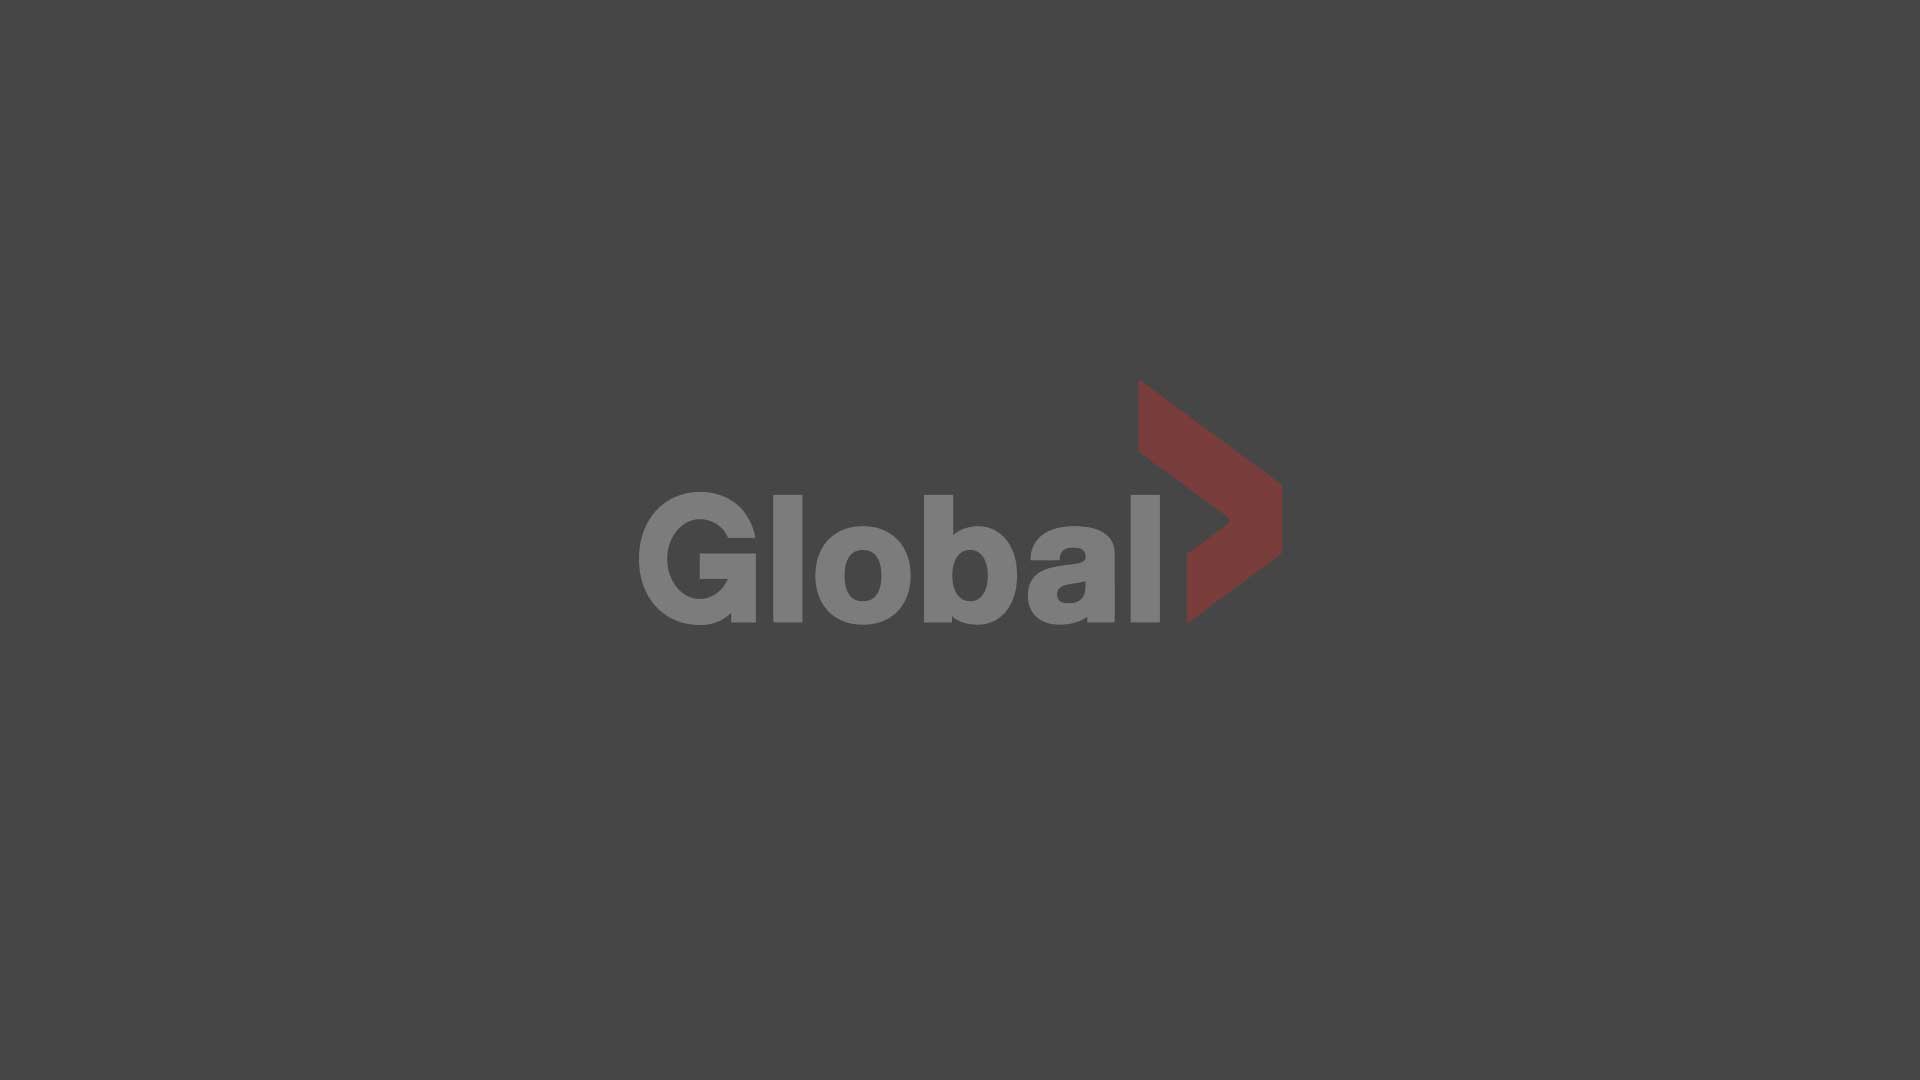 Global Original ‘Big Brother Canada’ Greenlit for a Milestone 10th Season